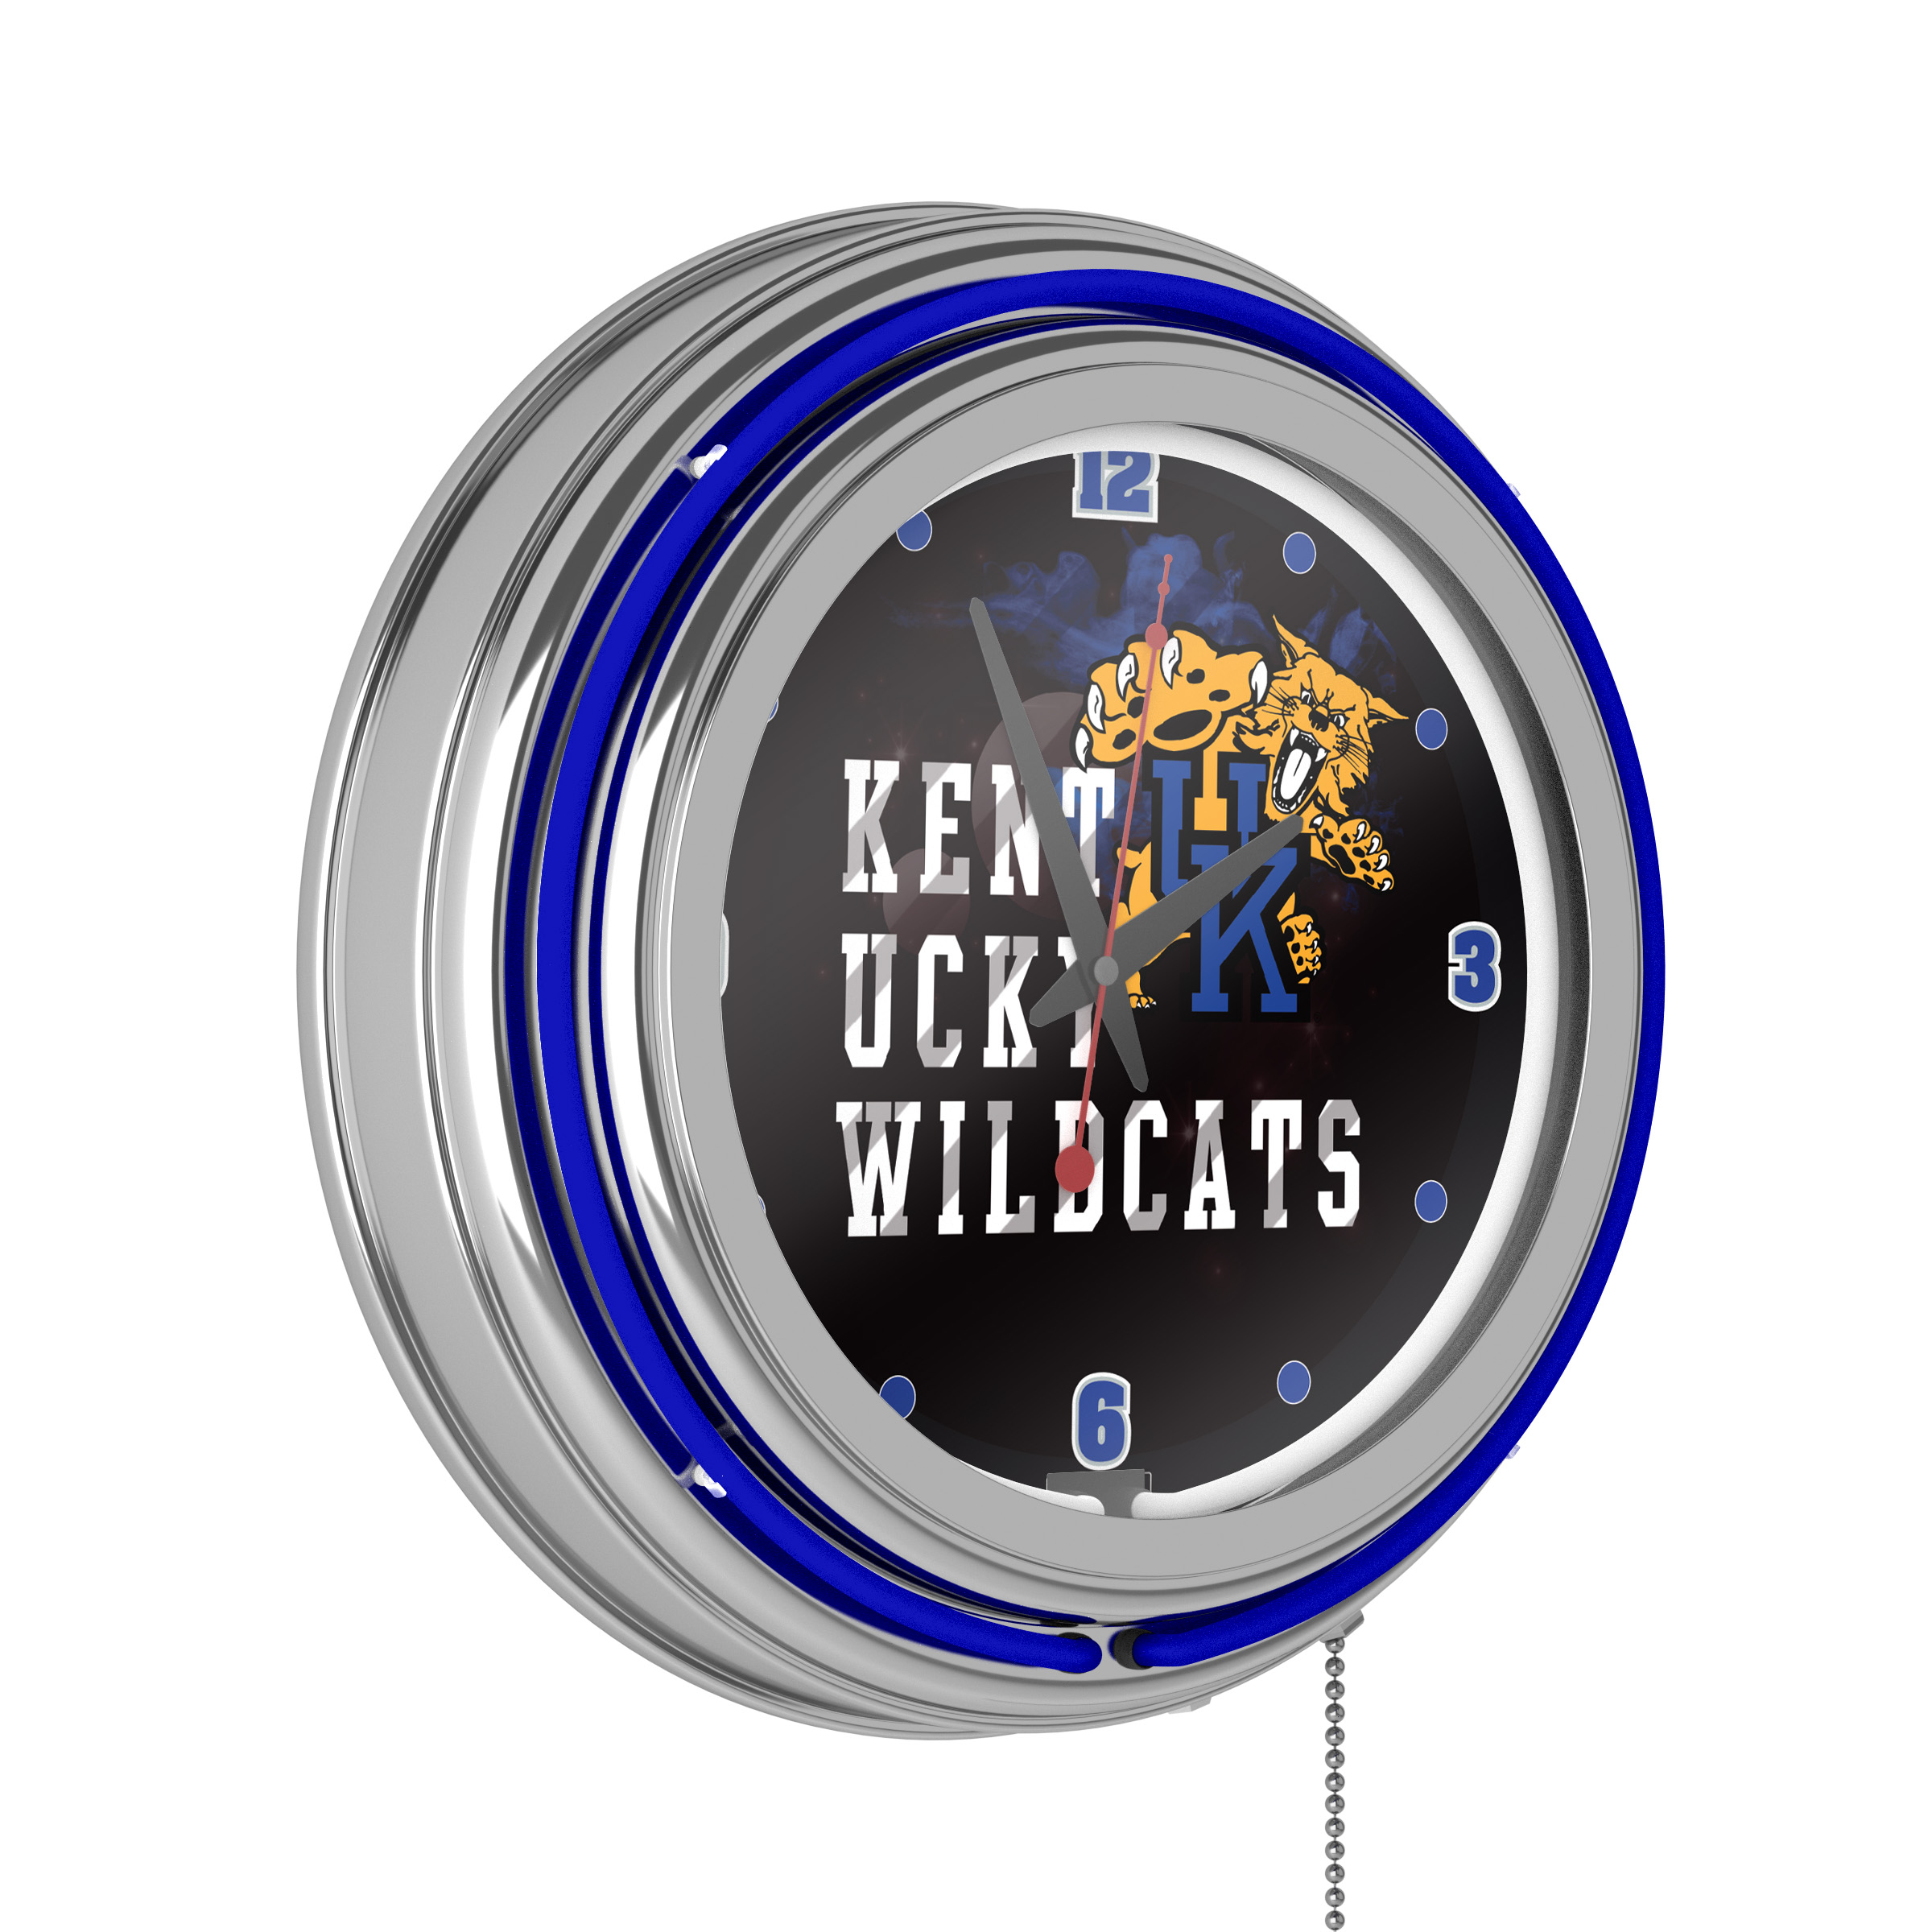 University of Kentucky Wildcats Chrome Double Rung Neon Clock - Smoke - image 1 of 6